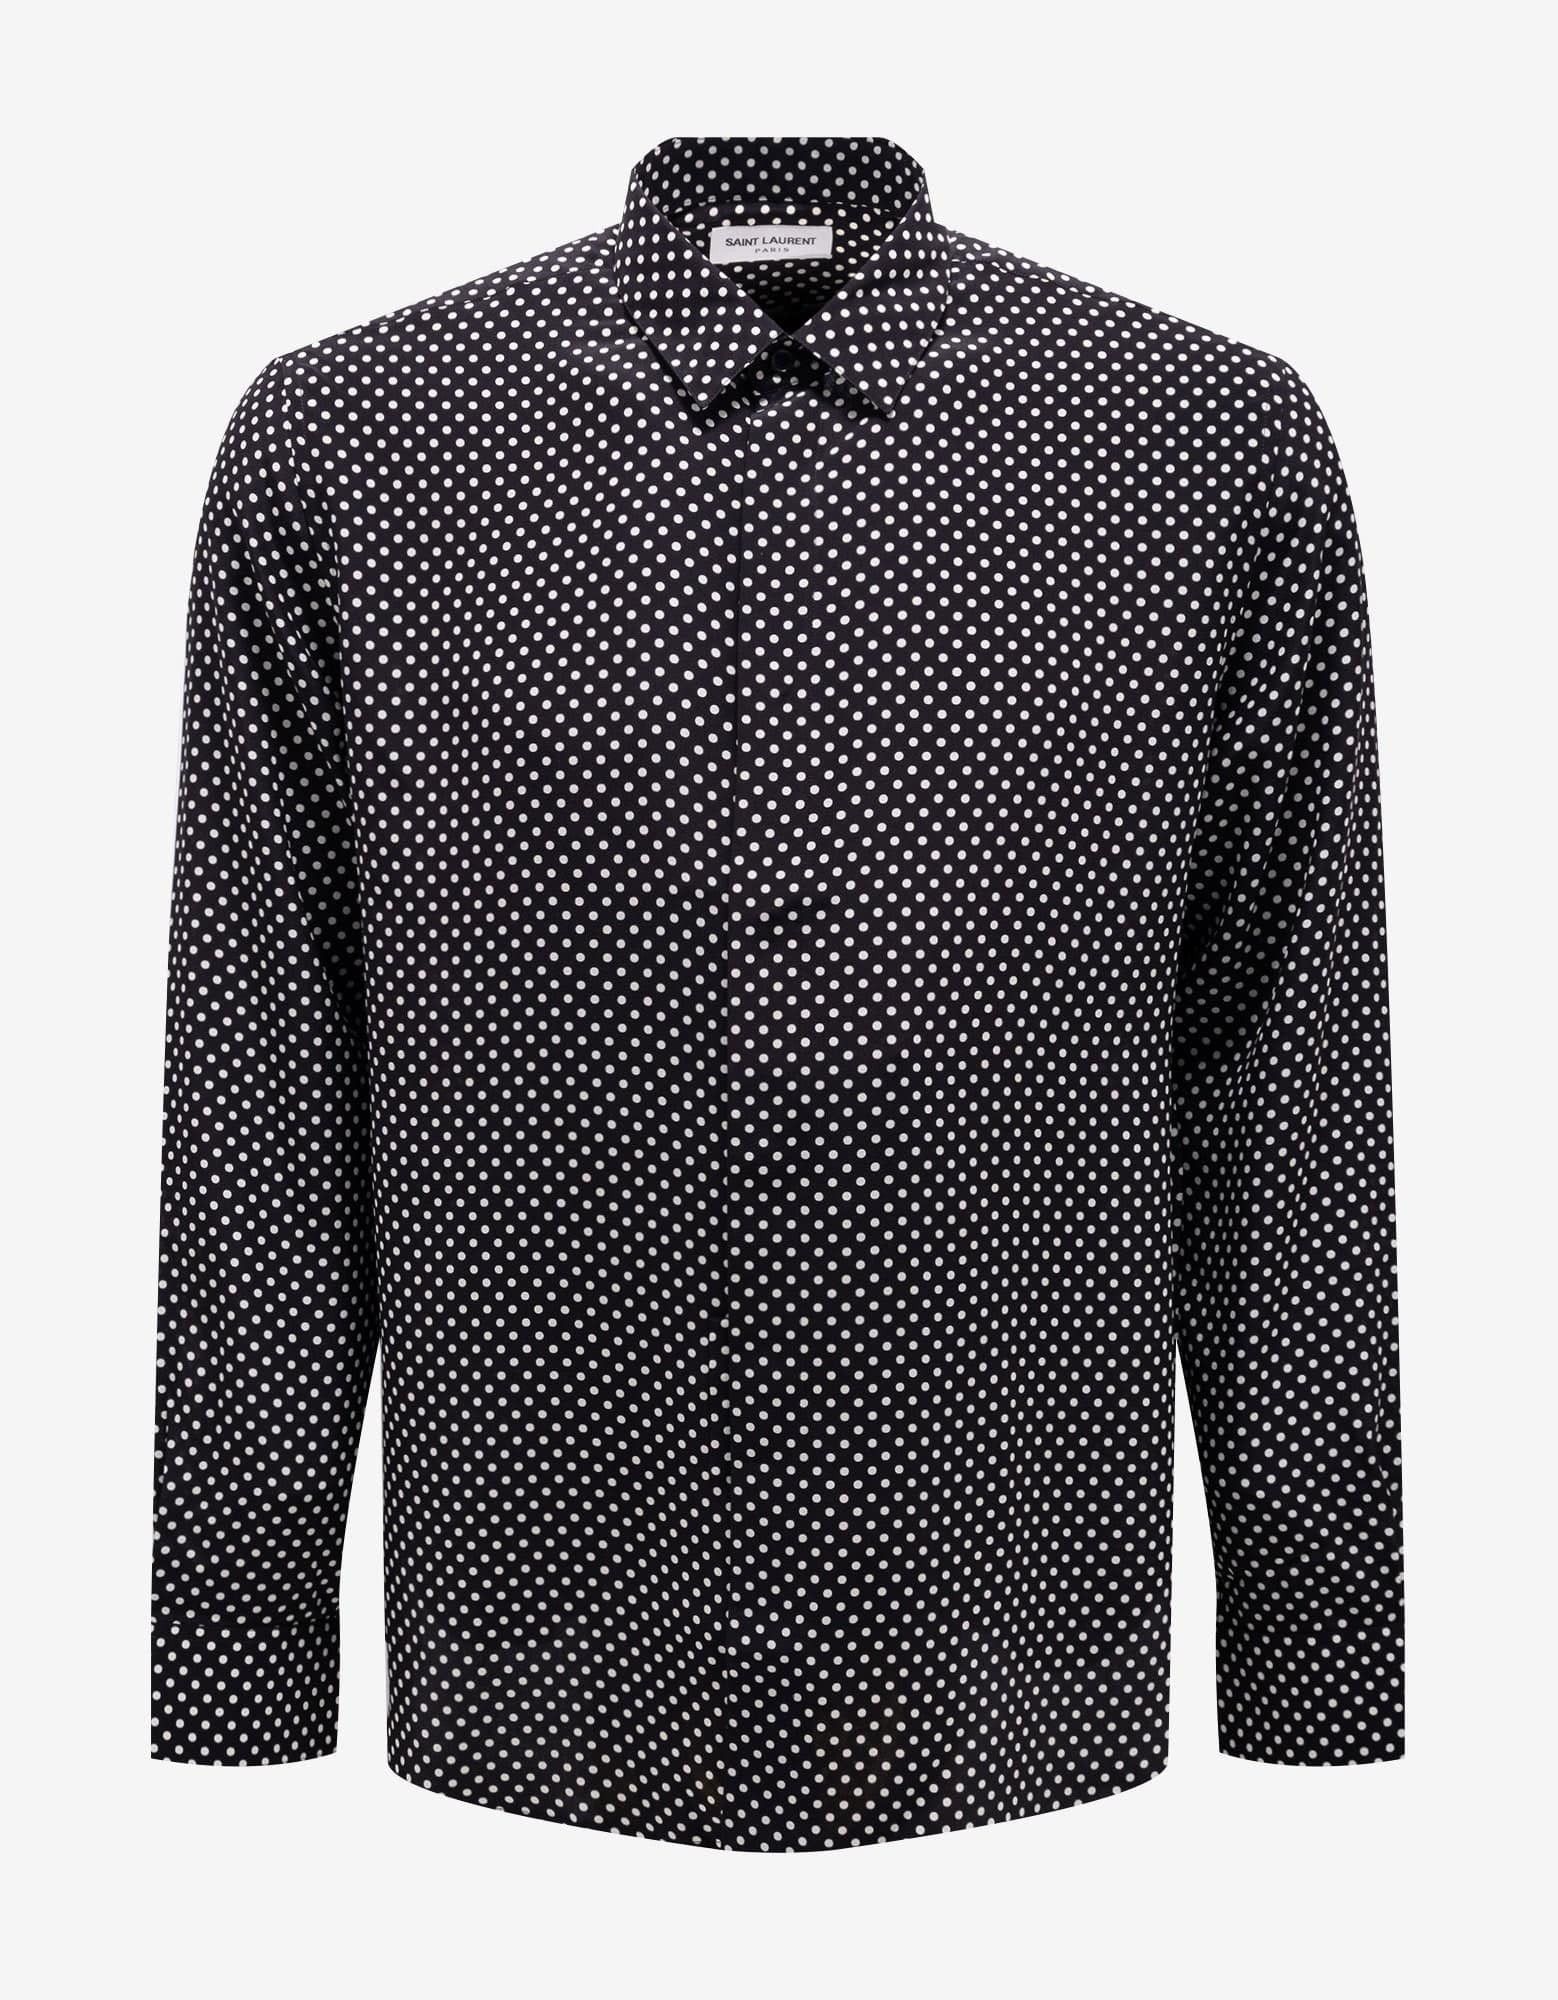 Saint Laurent Paris Black Polka Dot Silk Shirt size 39 | Grailed